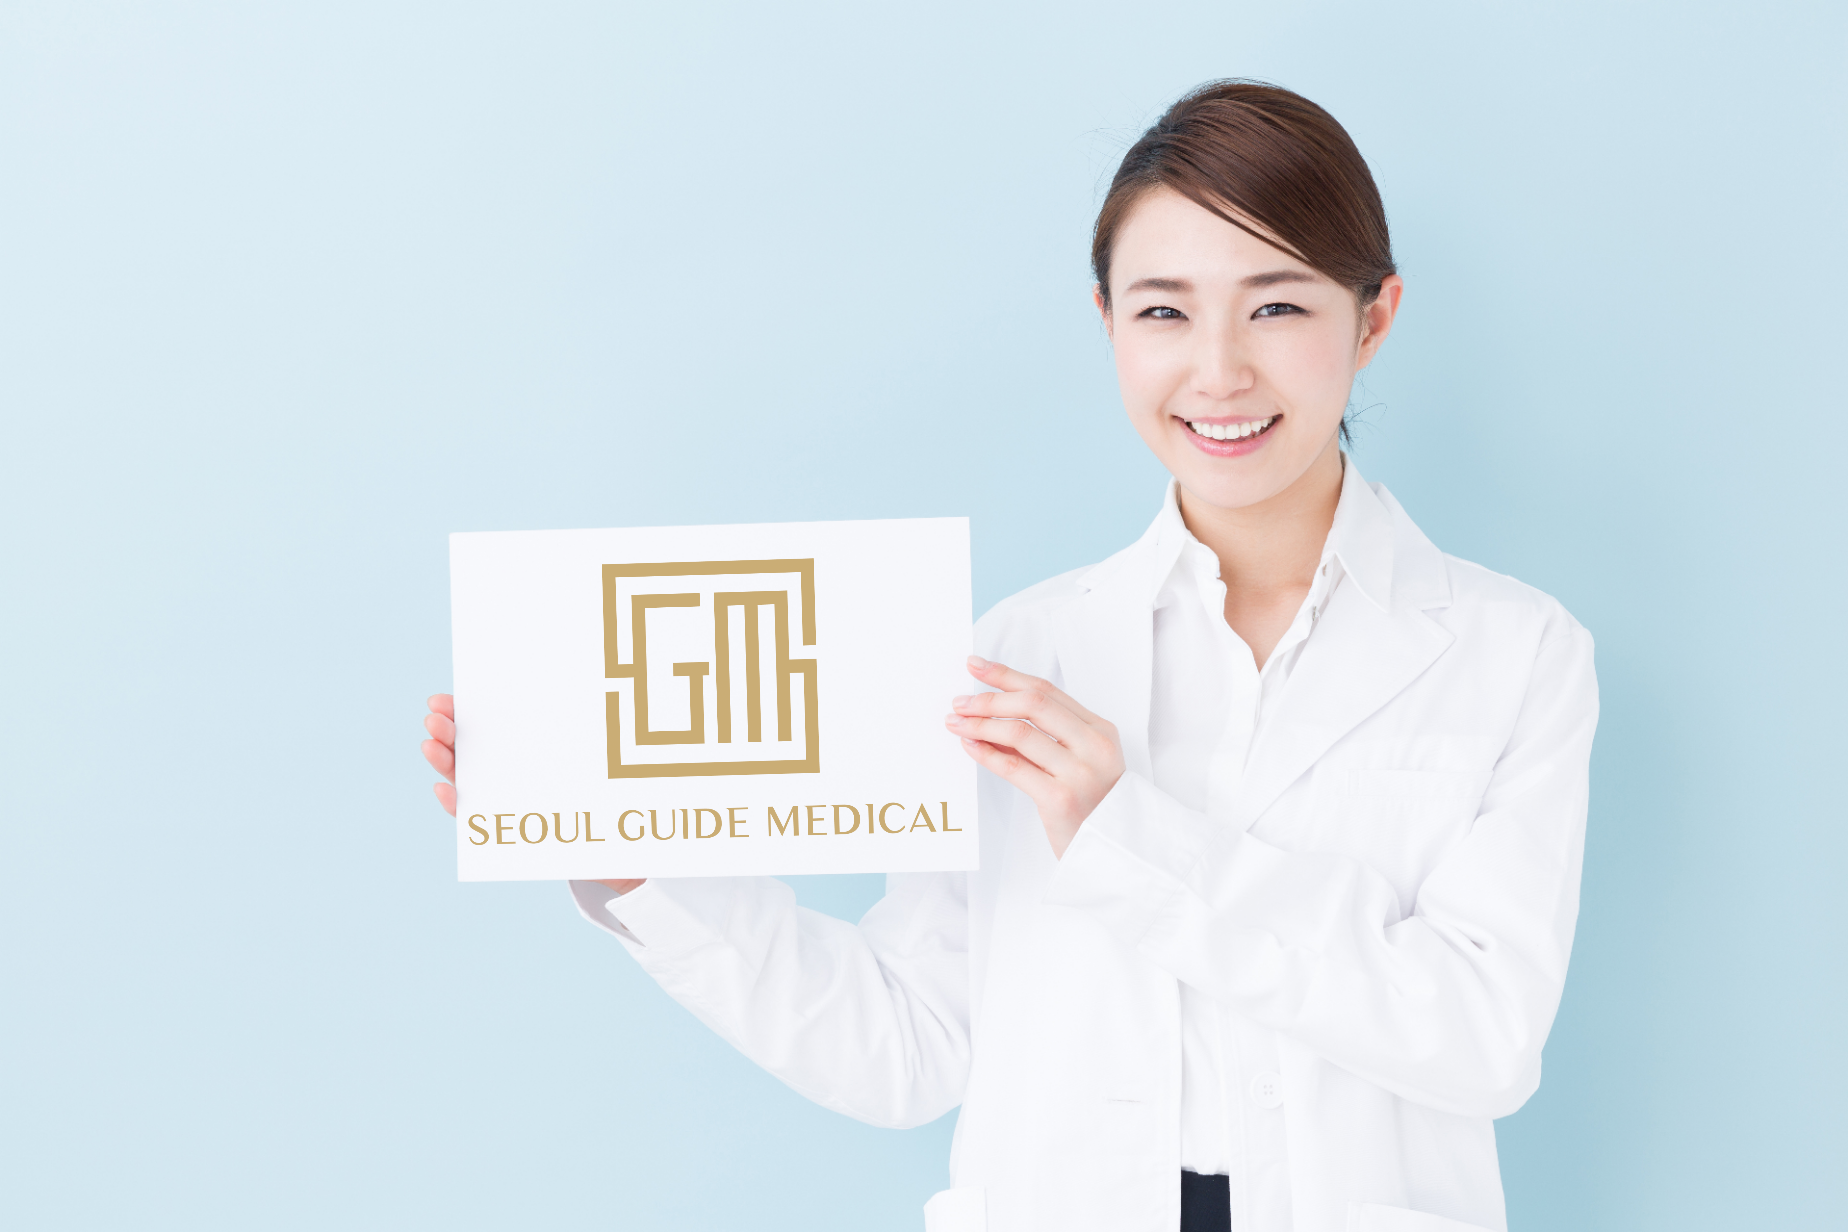 seoul guide medical logo